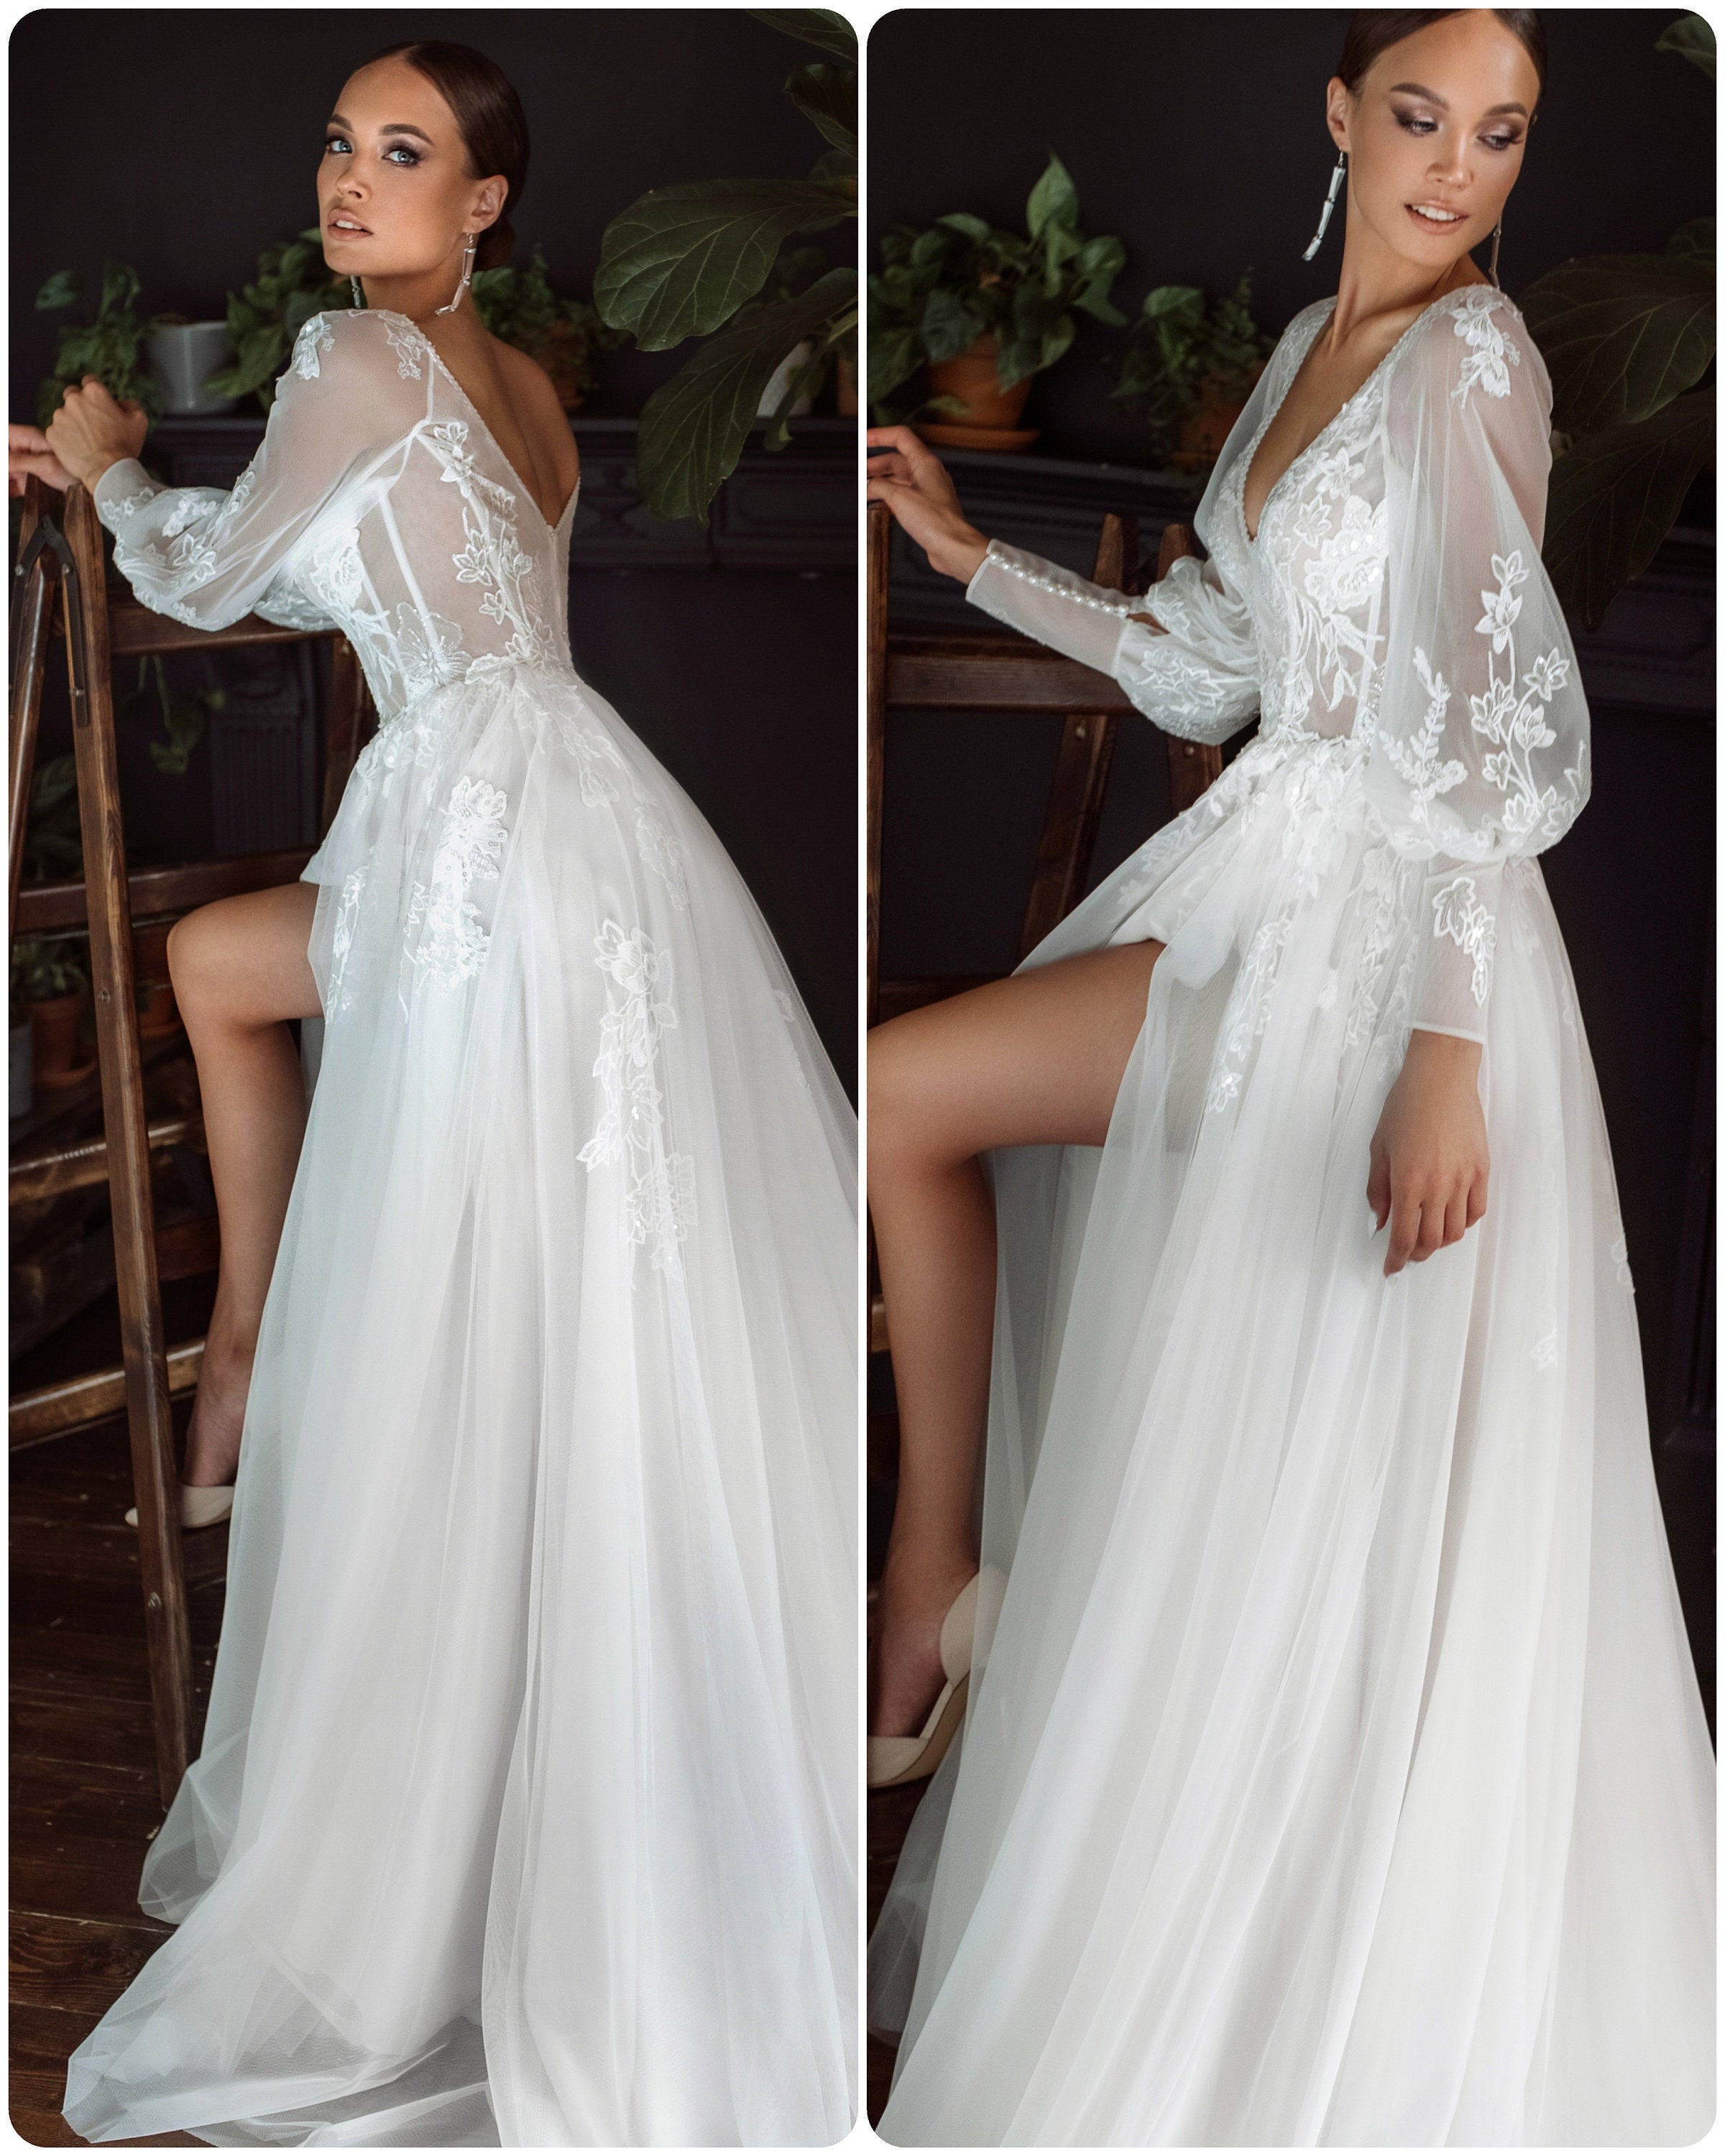 Romantic Wedding Dress With Sleevestulle Wedding Dress | Etsy